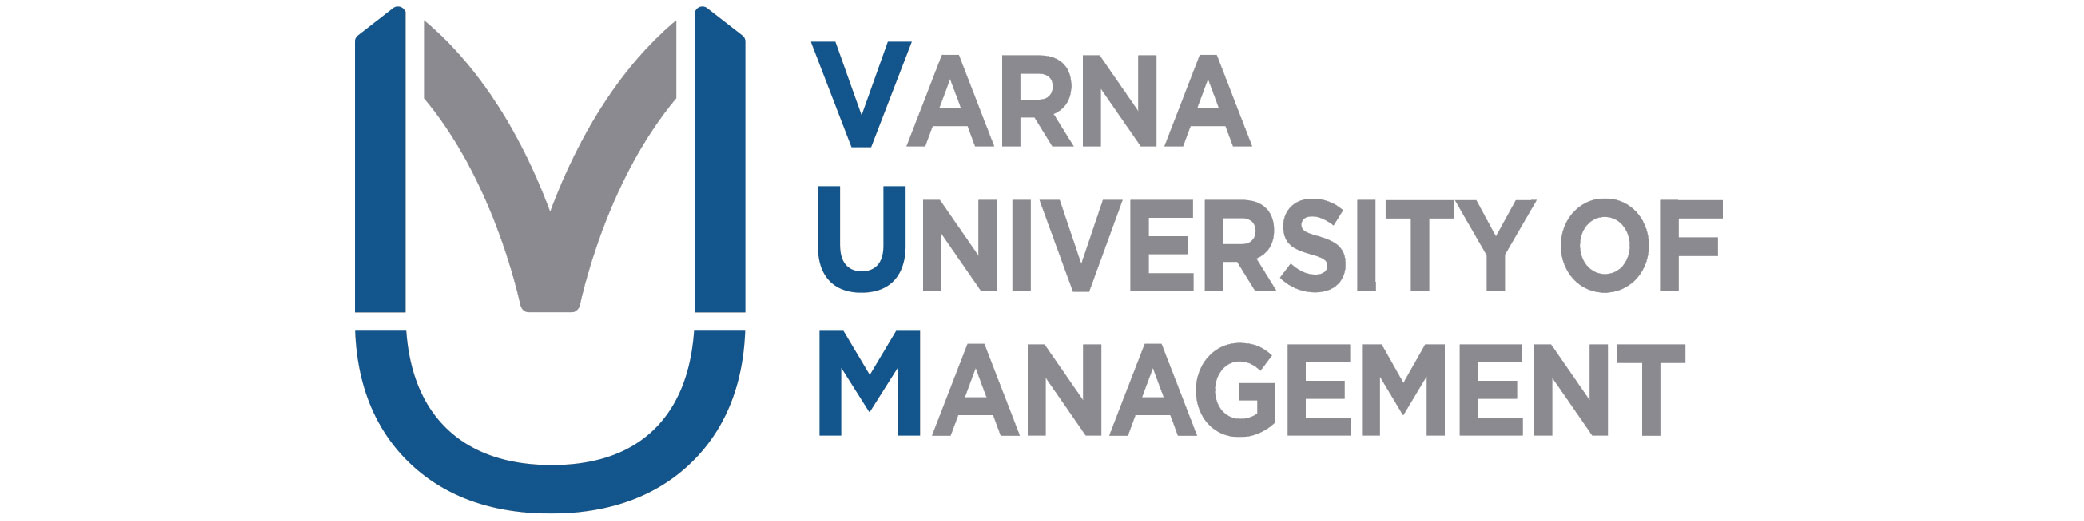 Varna University of Management